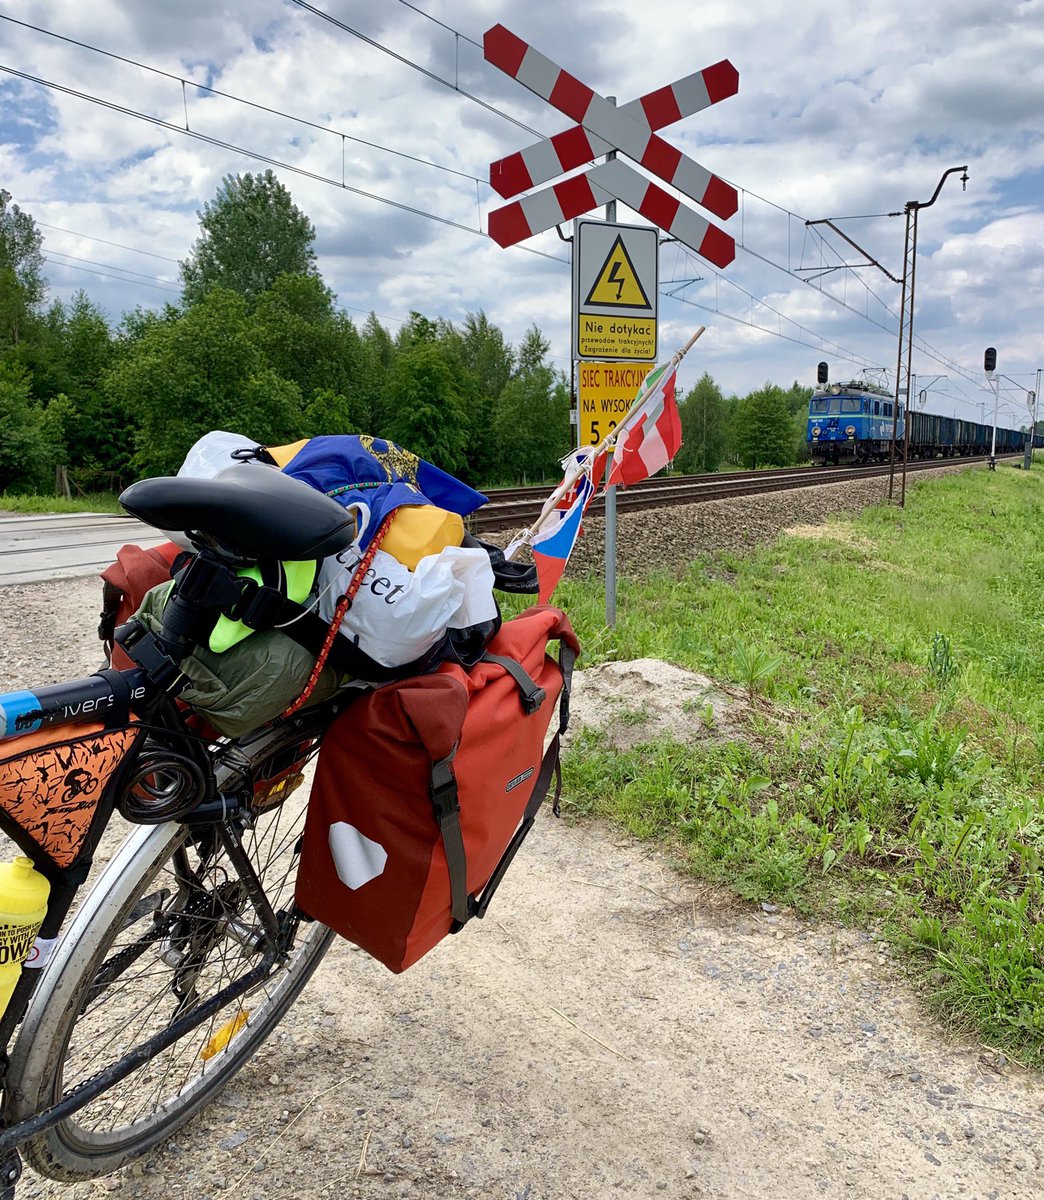 8th day:110km from #Rzeszów to #Ulanów ,first day along the #greenvelo route 😉 #vienna2tallinn #fahrradtour #travellingbybike #cycling #inbici #polandbybike #poland #lifeintravel #cyclinglife #europebybike #biketour #fahrradtour #bycicle #cicloturism #rowerowy #rowerowo